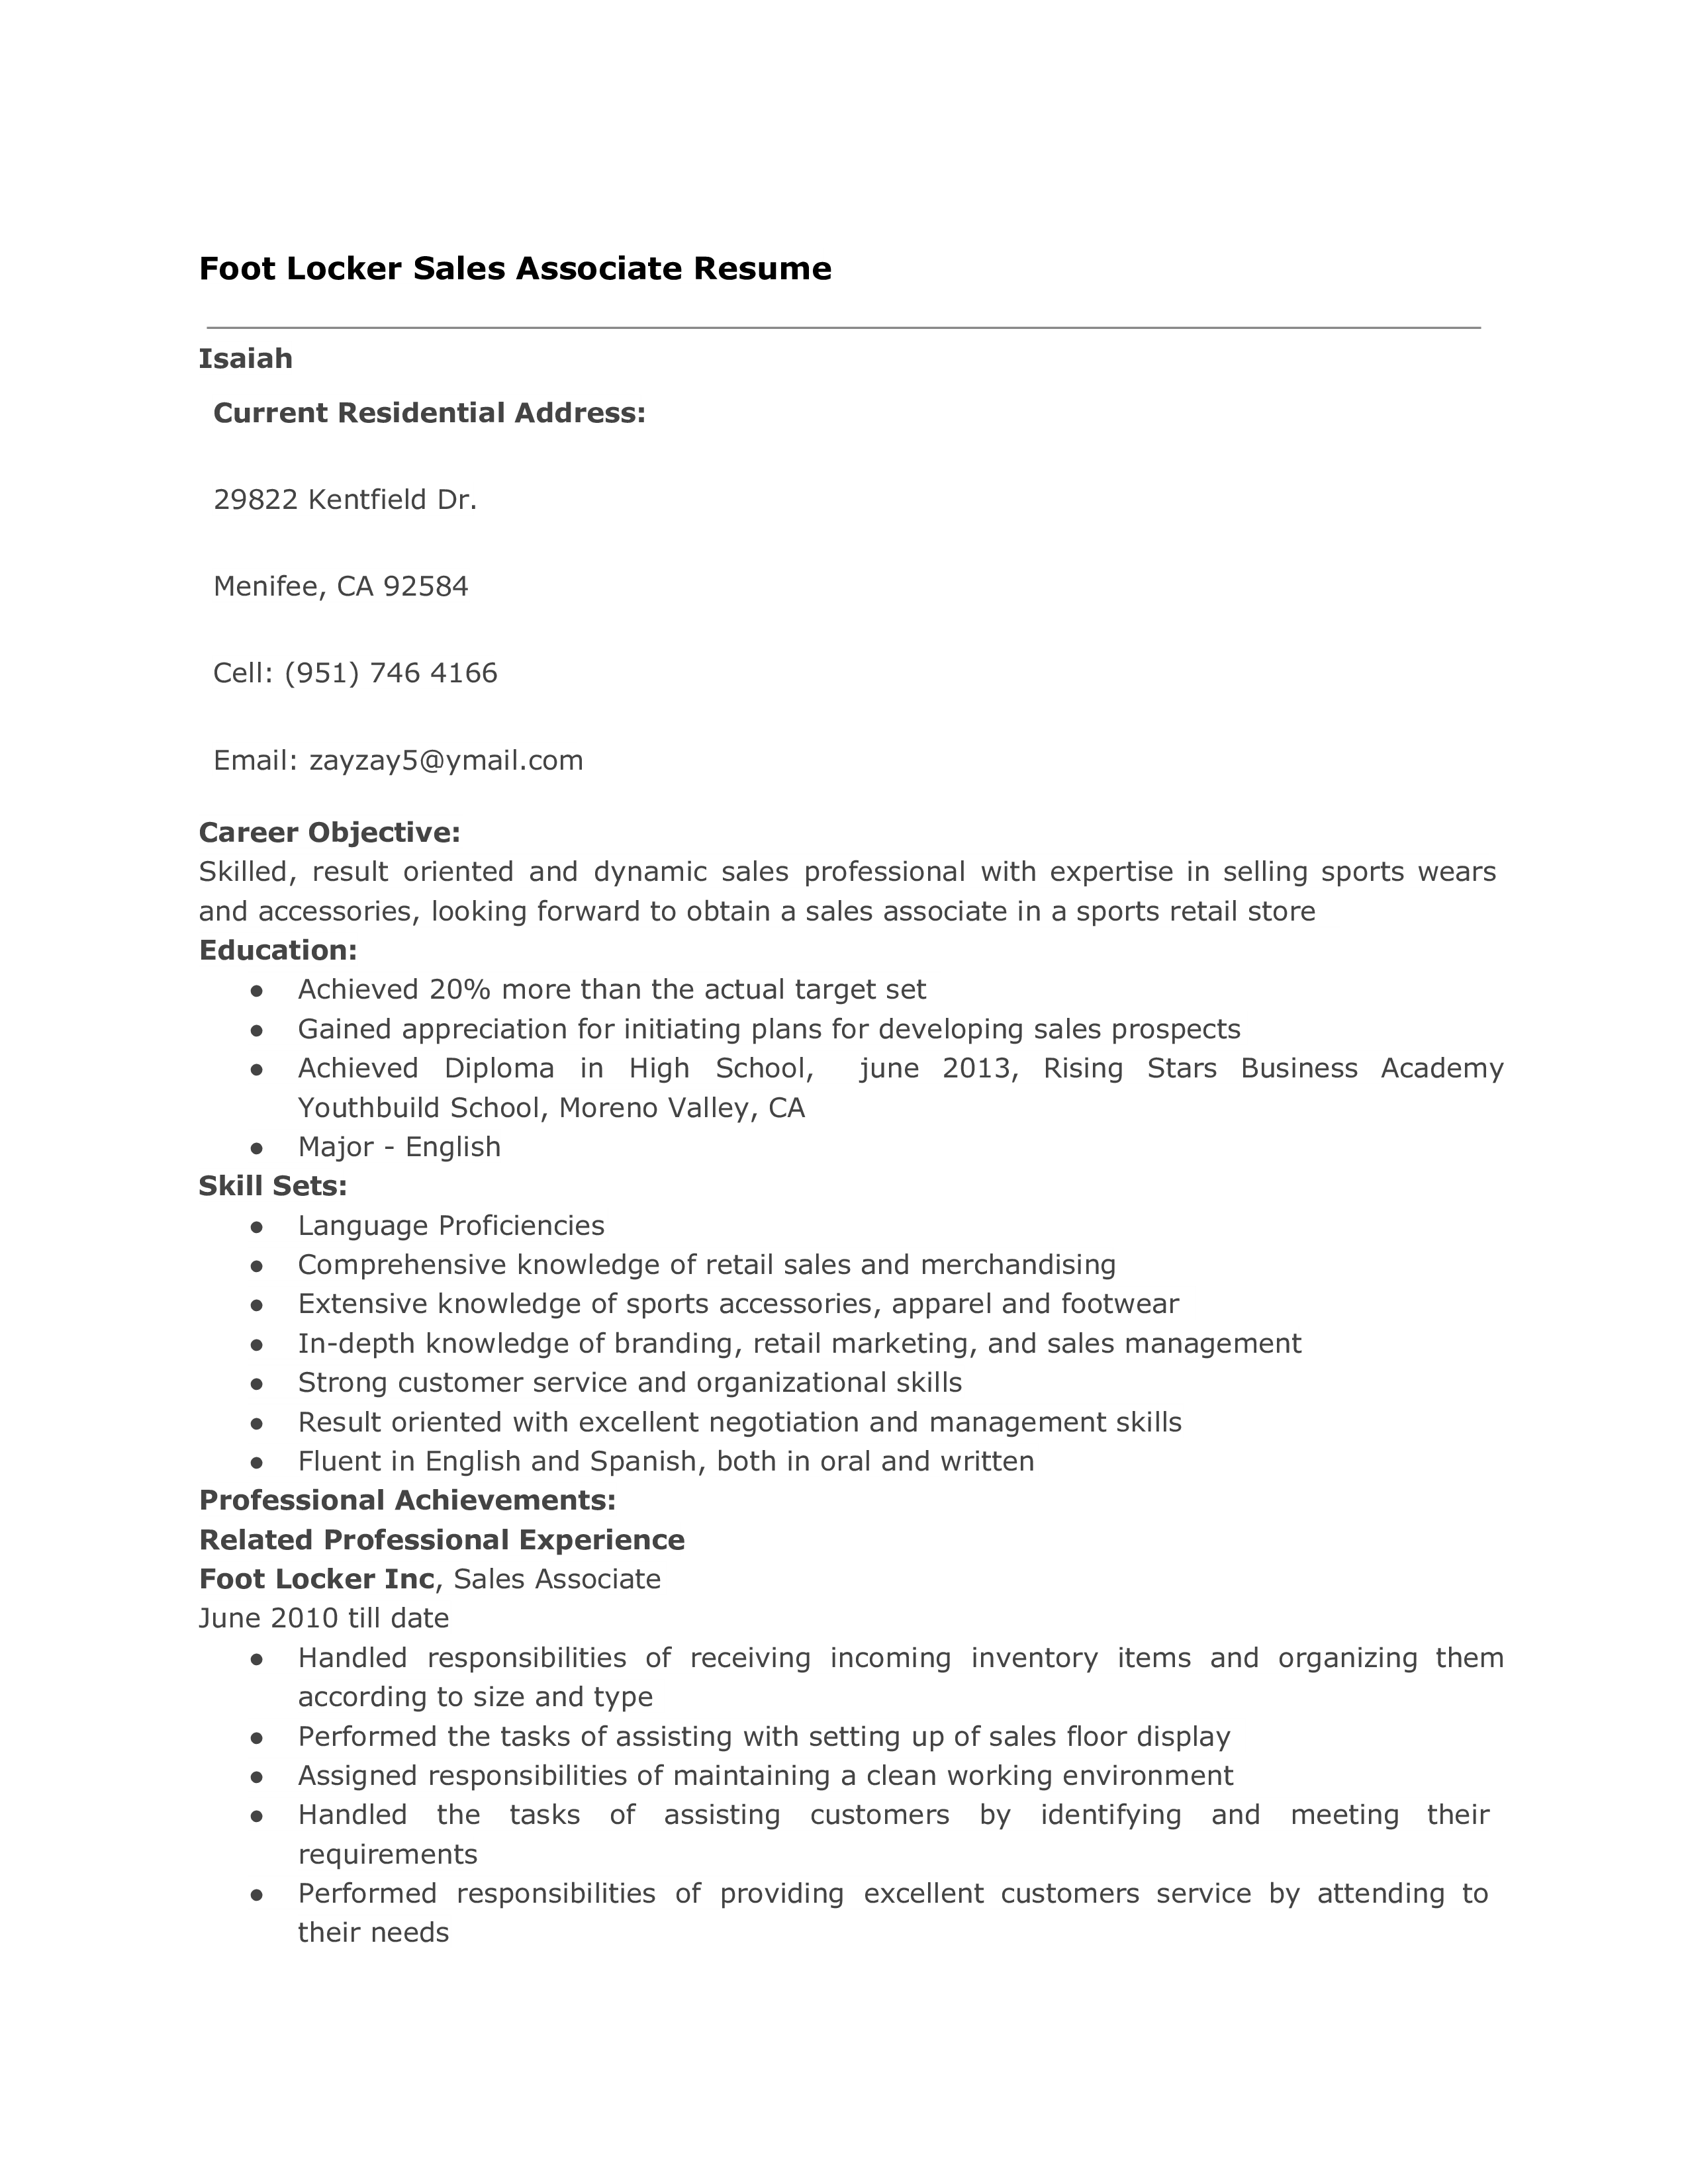 foot locker sales associate resume template